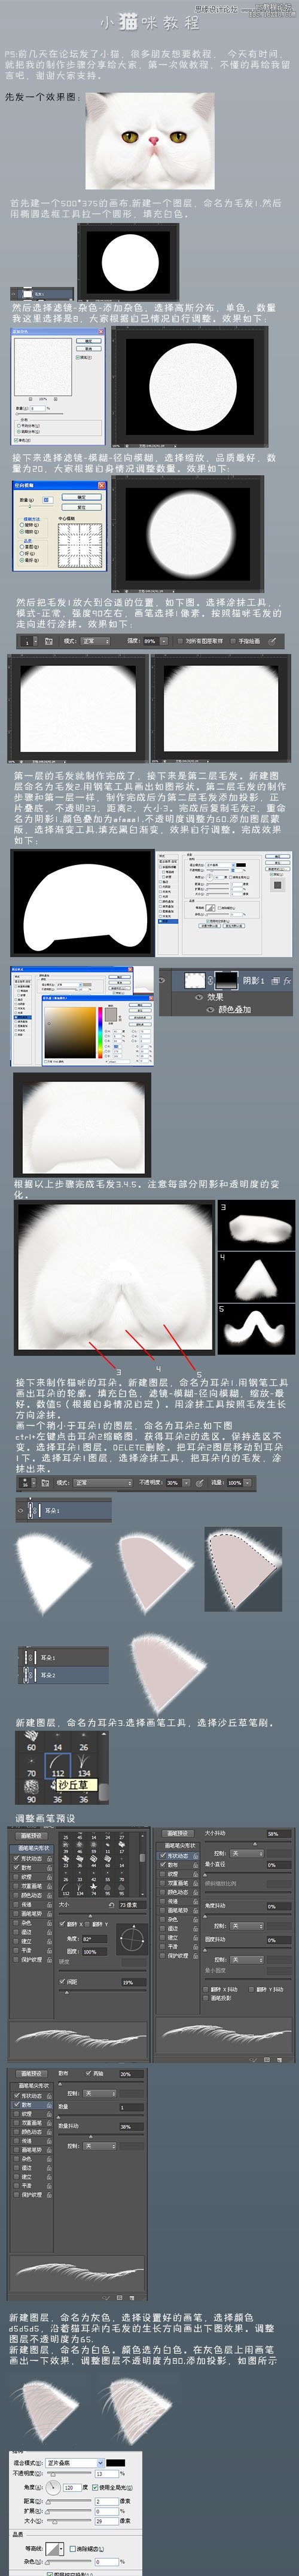 Photoshop鼠绘猫头教程